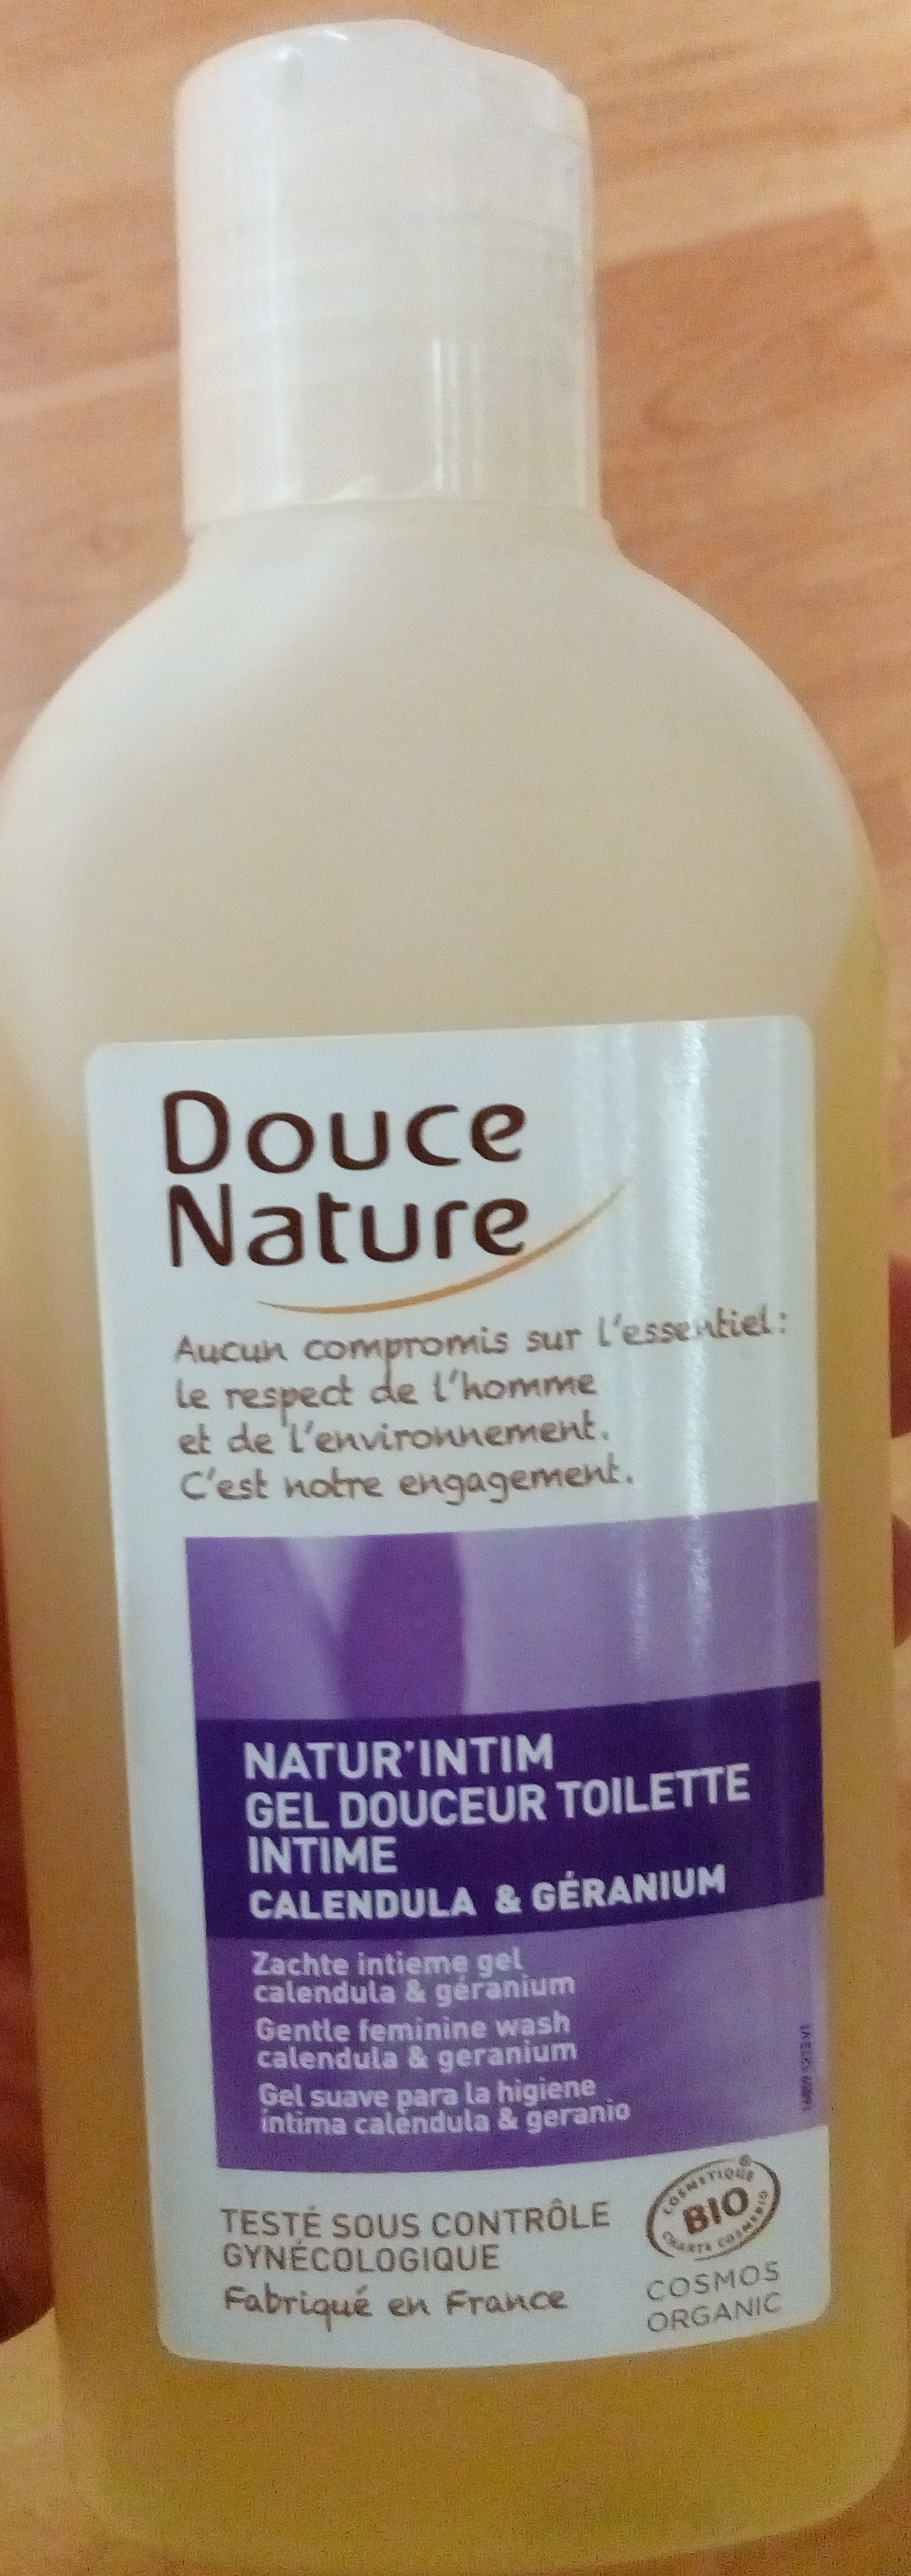 Natur'Intim Gel douceur Toilette Intime - Product - fr